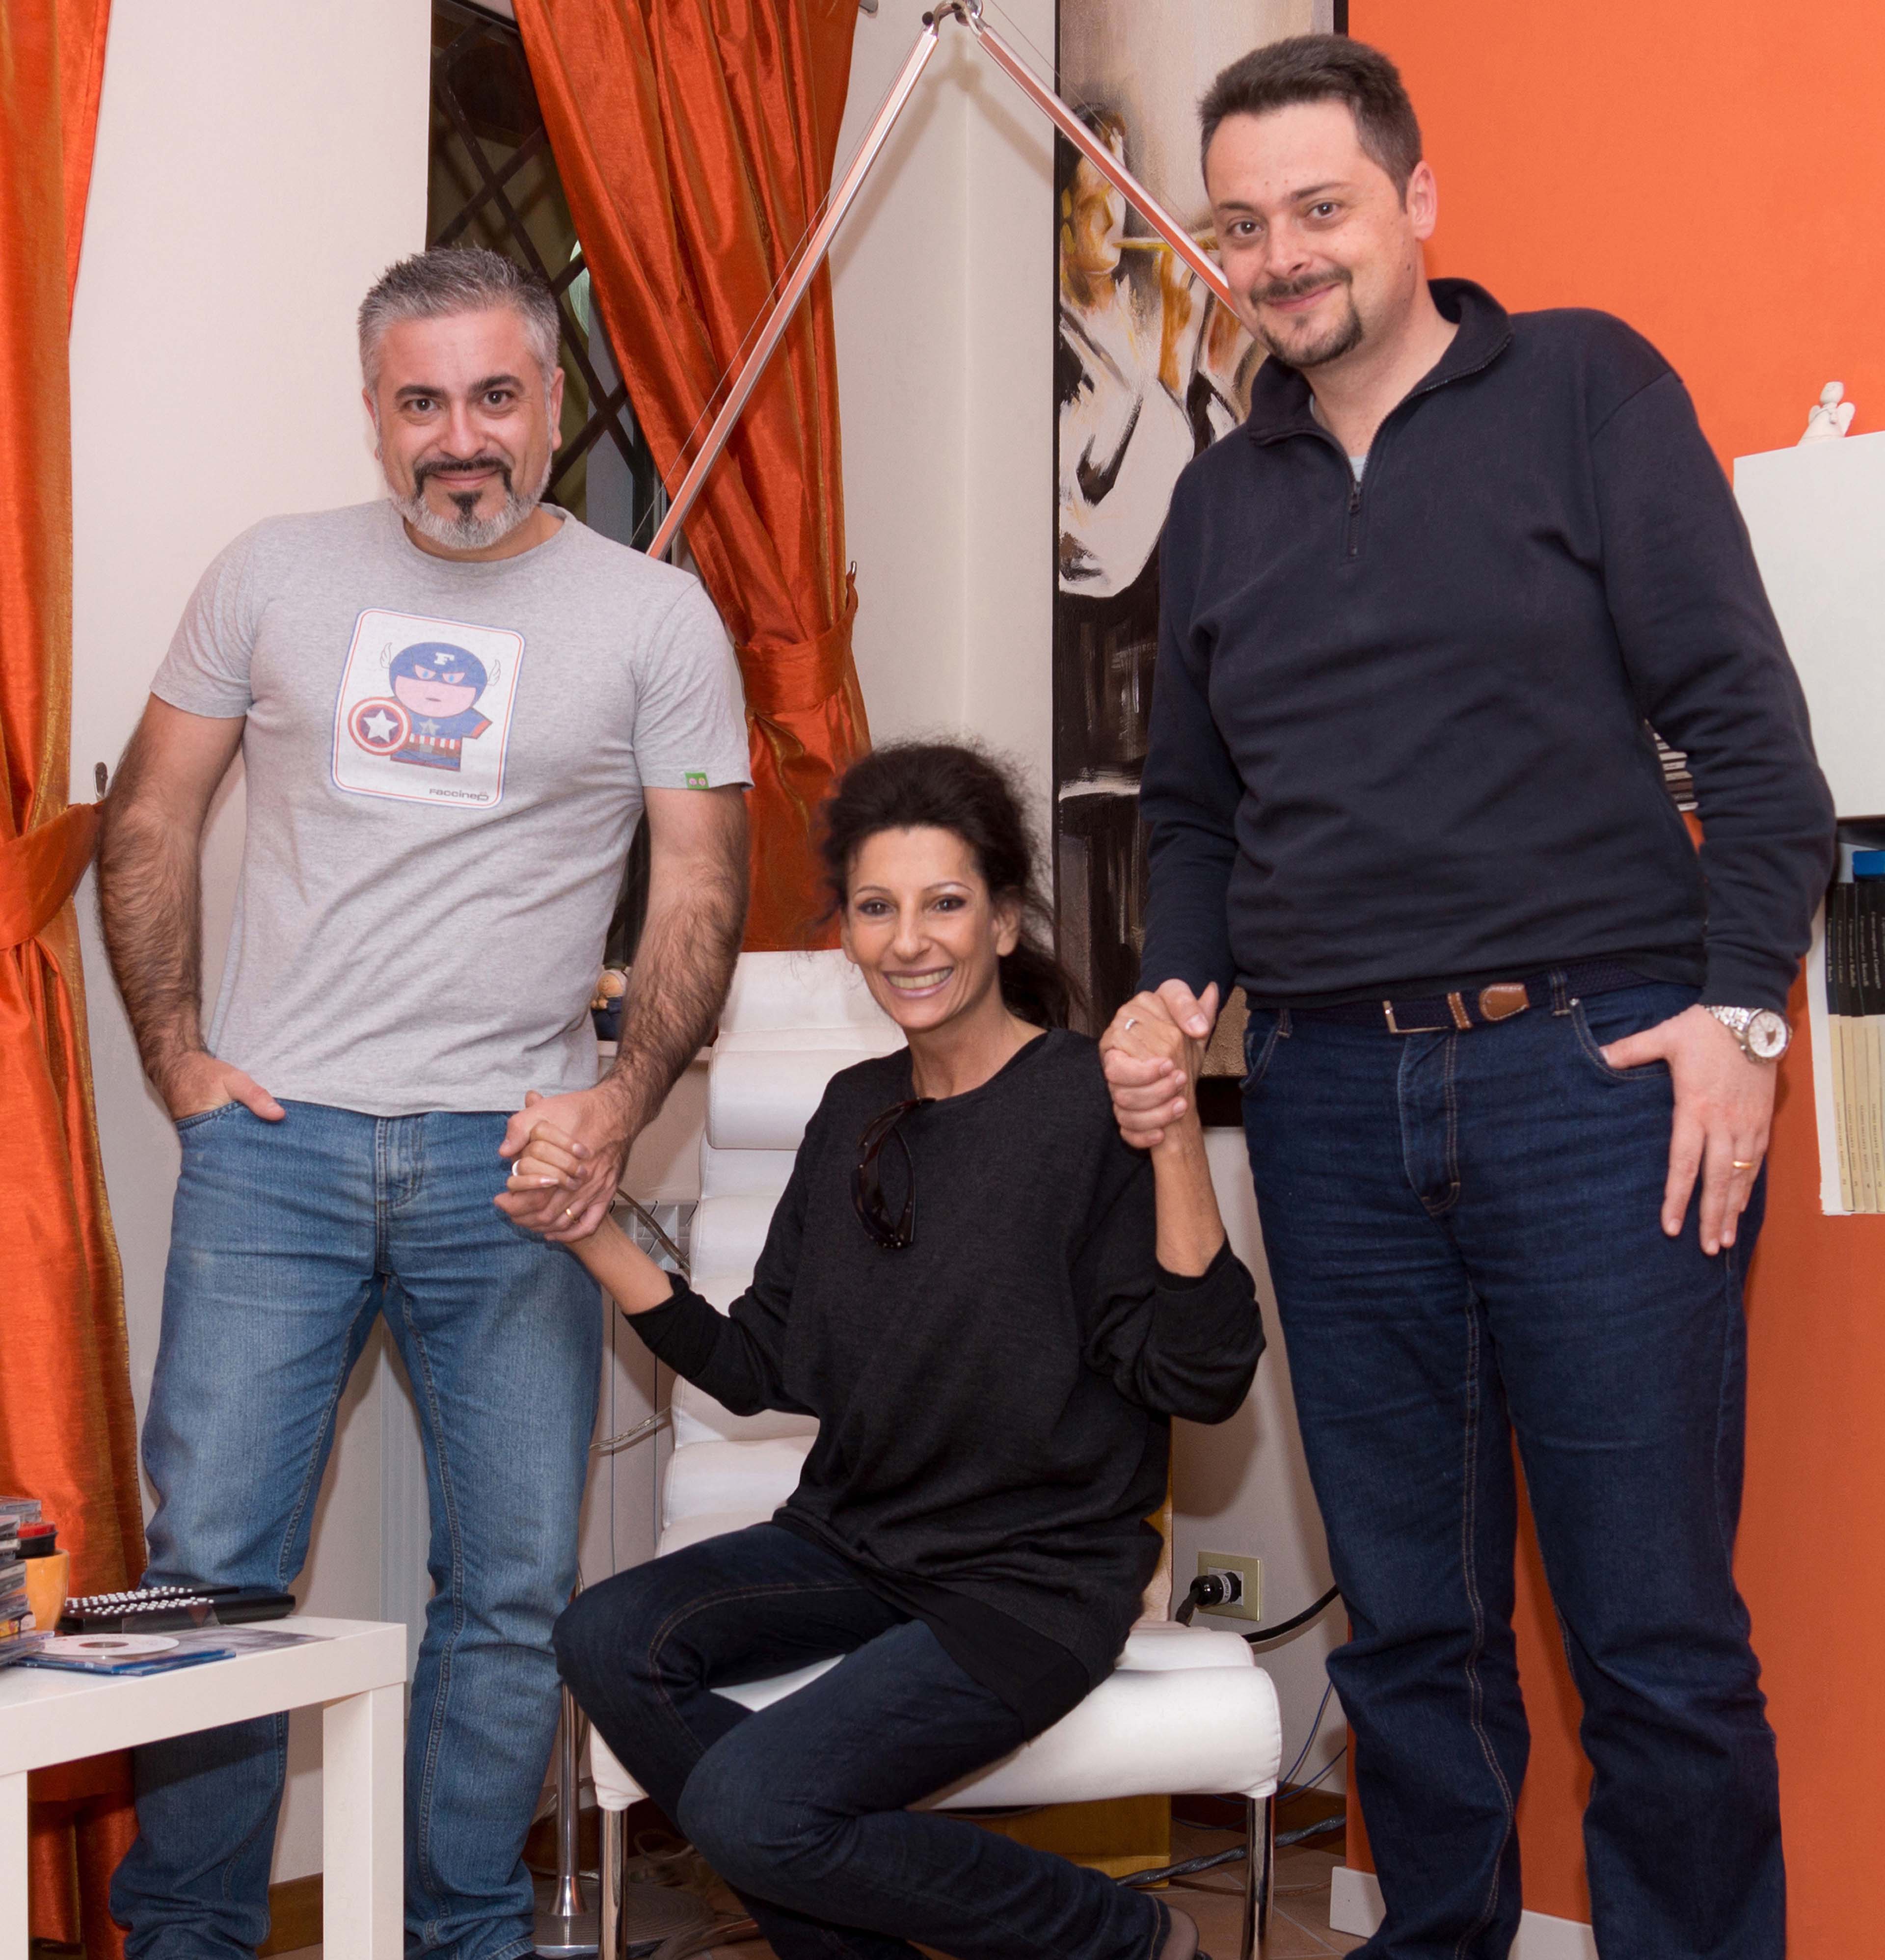 Lucia Aliberti with her Video Makers ELio Ragusa and Luca Turrisi⚘Studio⚘Recording⚘:http://www.luciaaliberti.it #luciaaliberti #elioragusa #lucaturrisi #videomakers #studio #recording